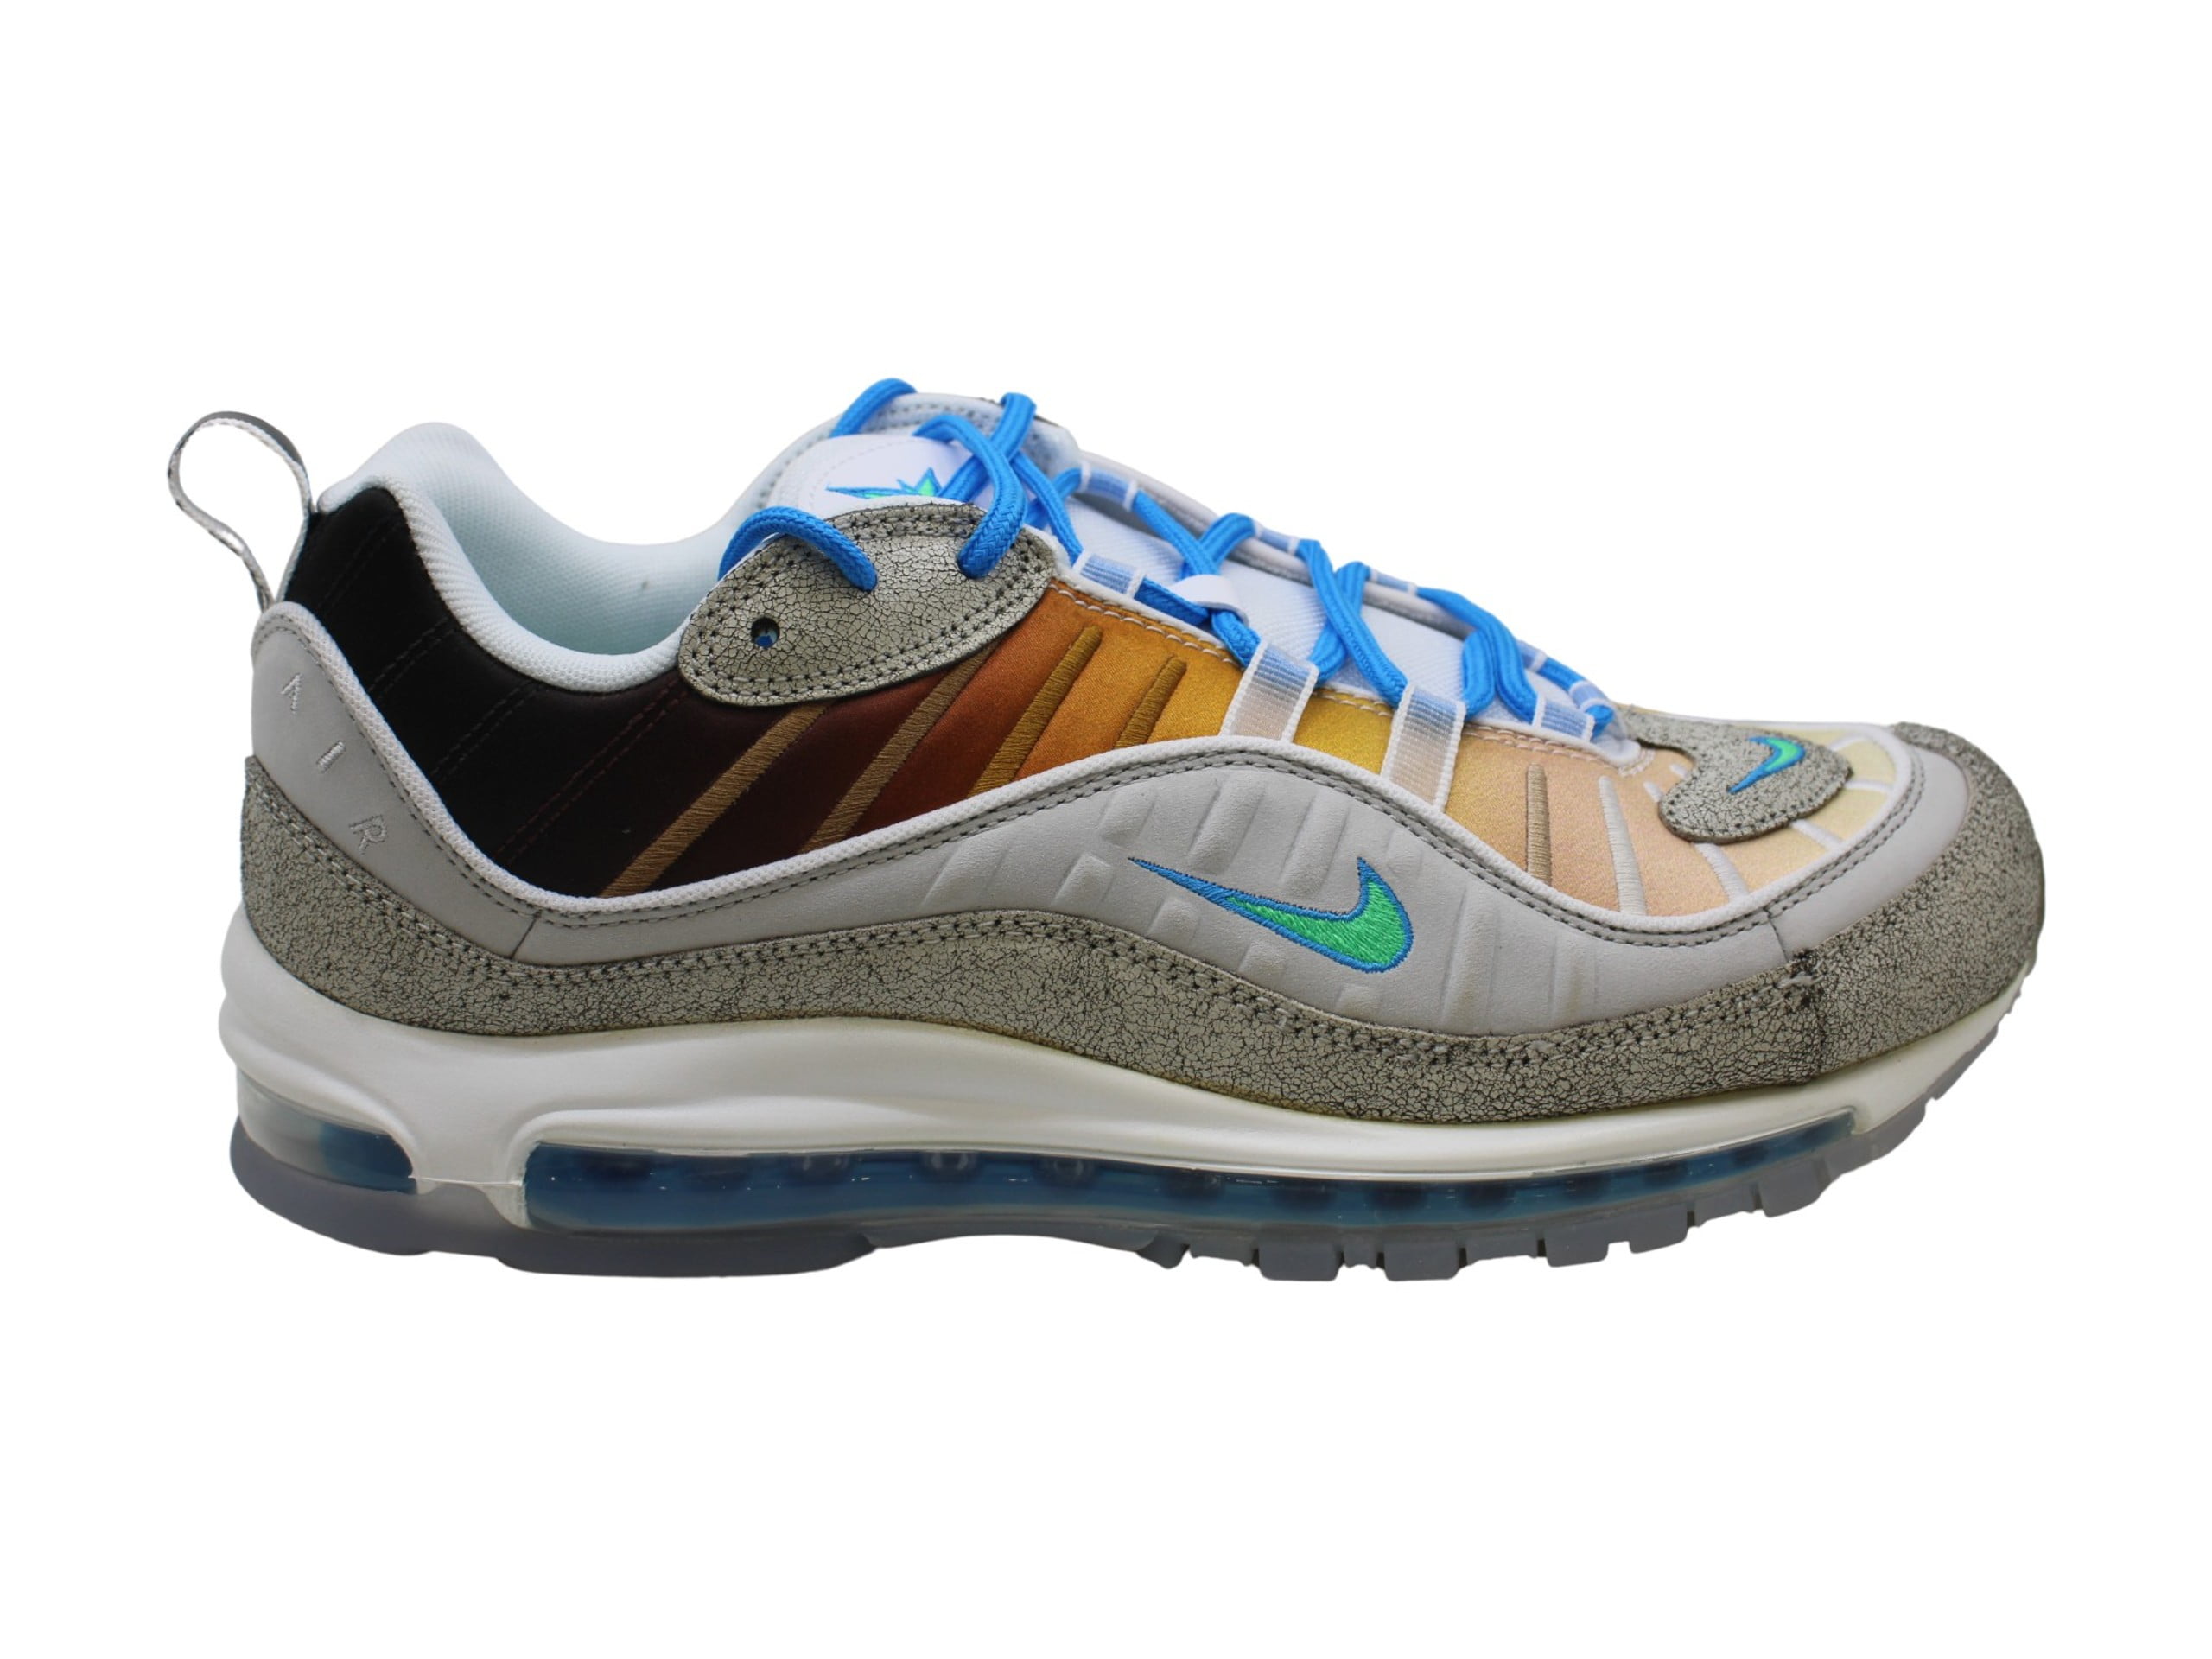 Nike Men's Shoes Air Max 98 OA GS Low Top Lace Up Running Sneaker ... بلسم للشعر الدهني